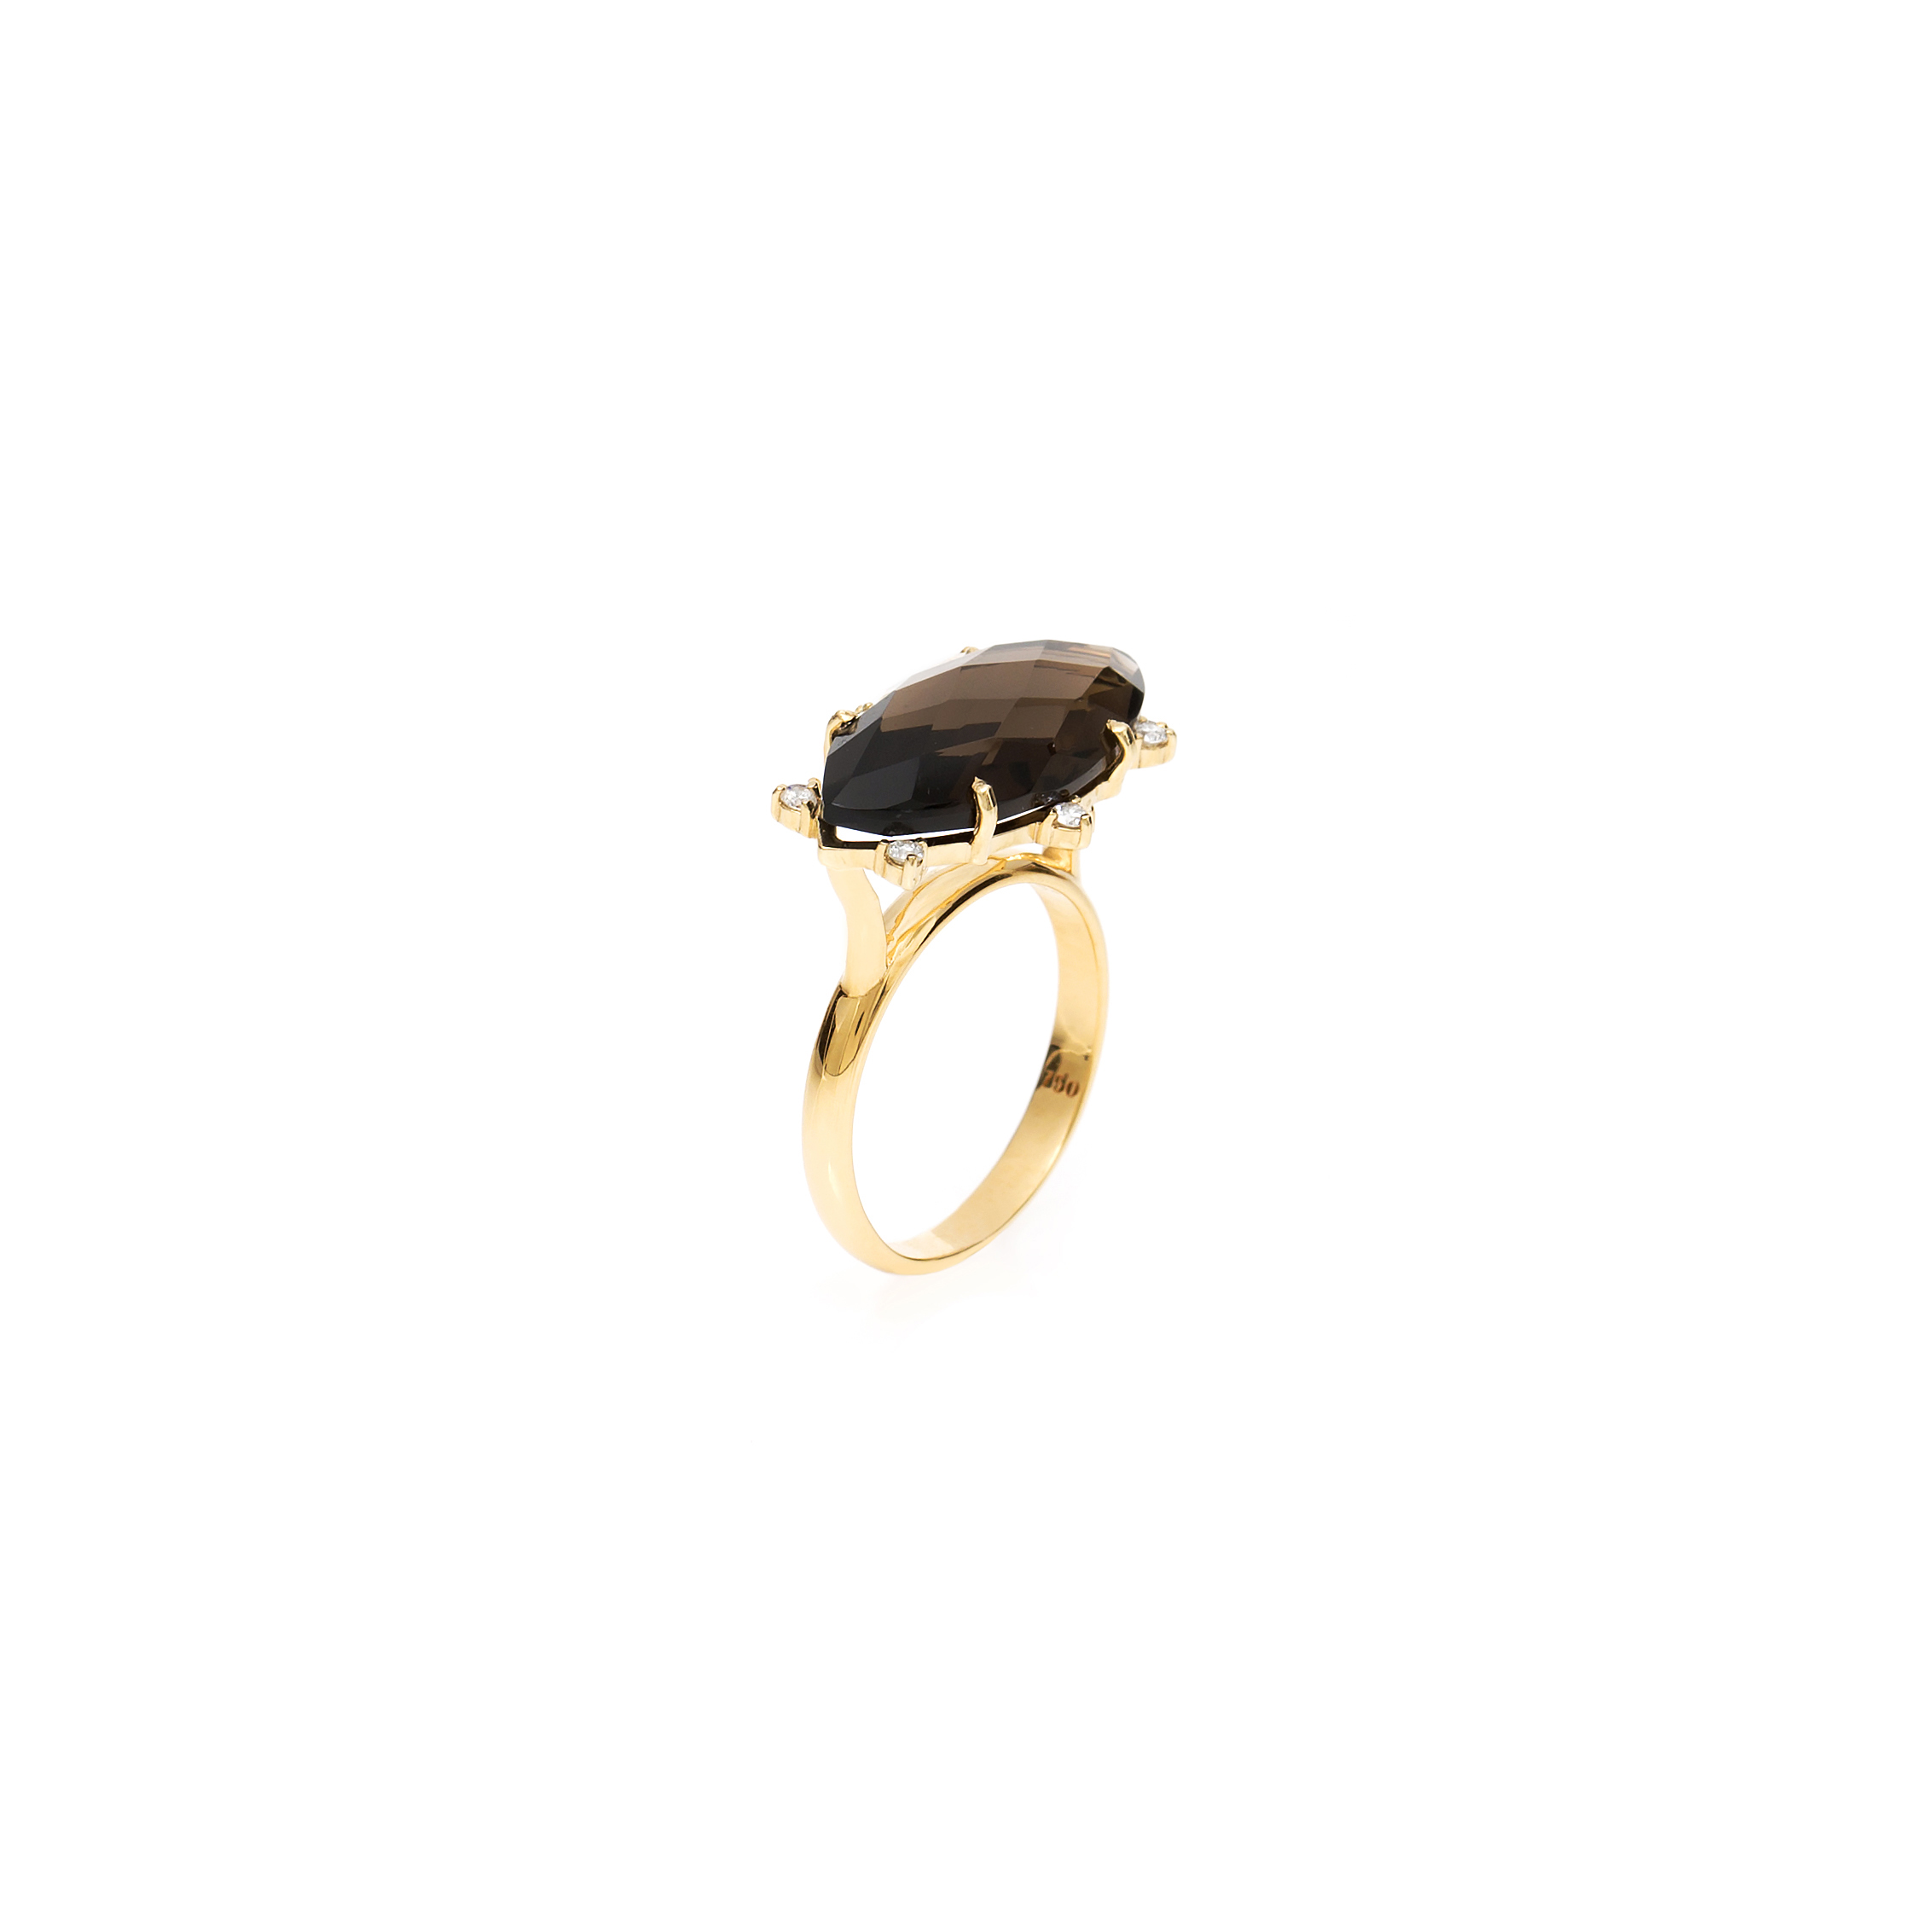 Ana Piazza Jewellery Design - Ring